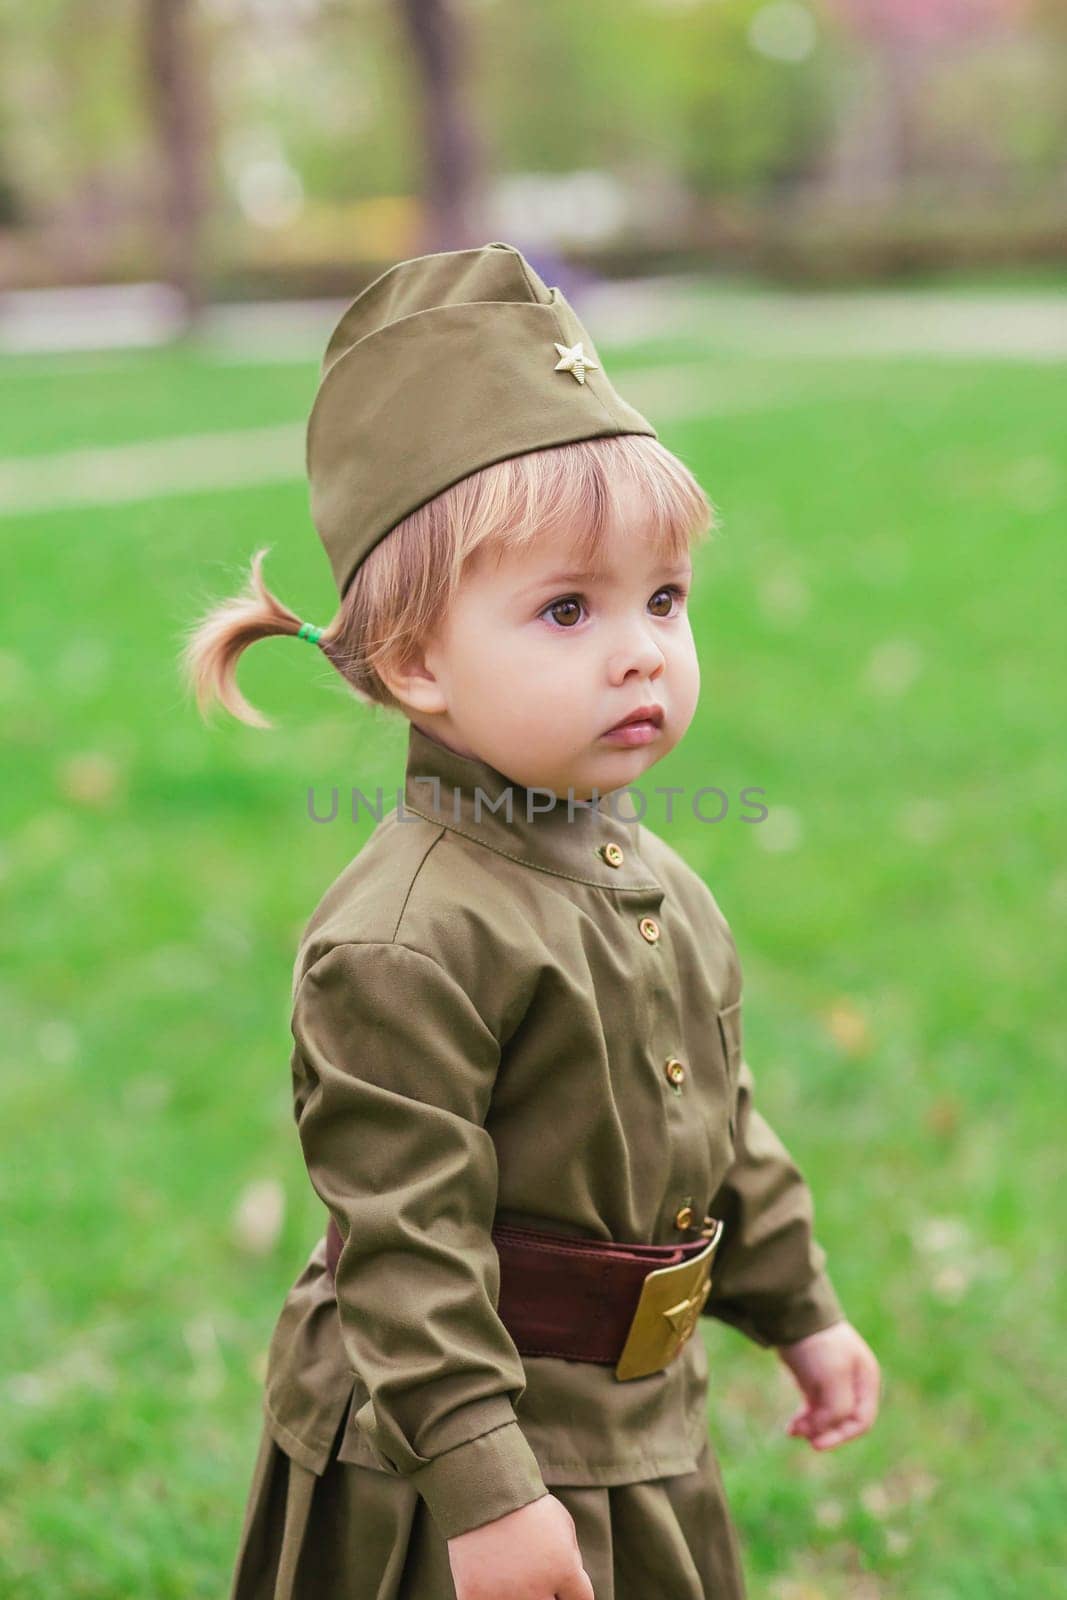 Adorable baby girl in Soviet military uniform by Viktor_Osypenko